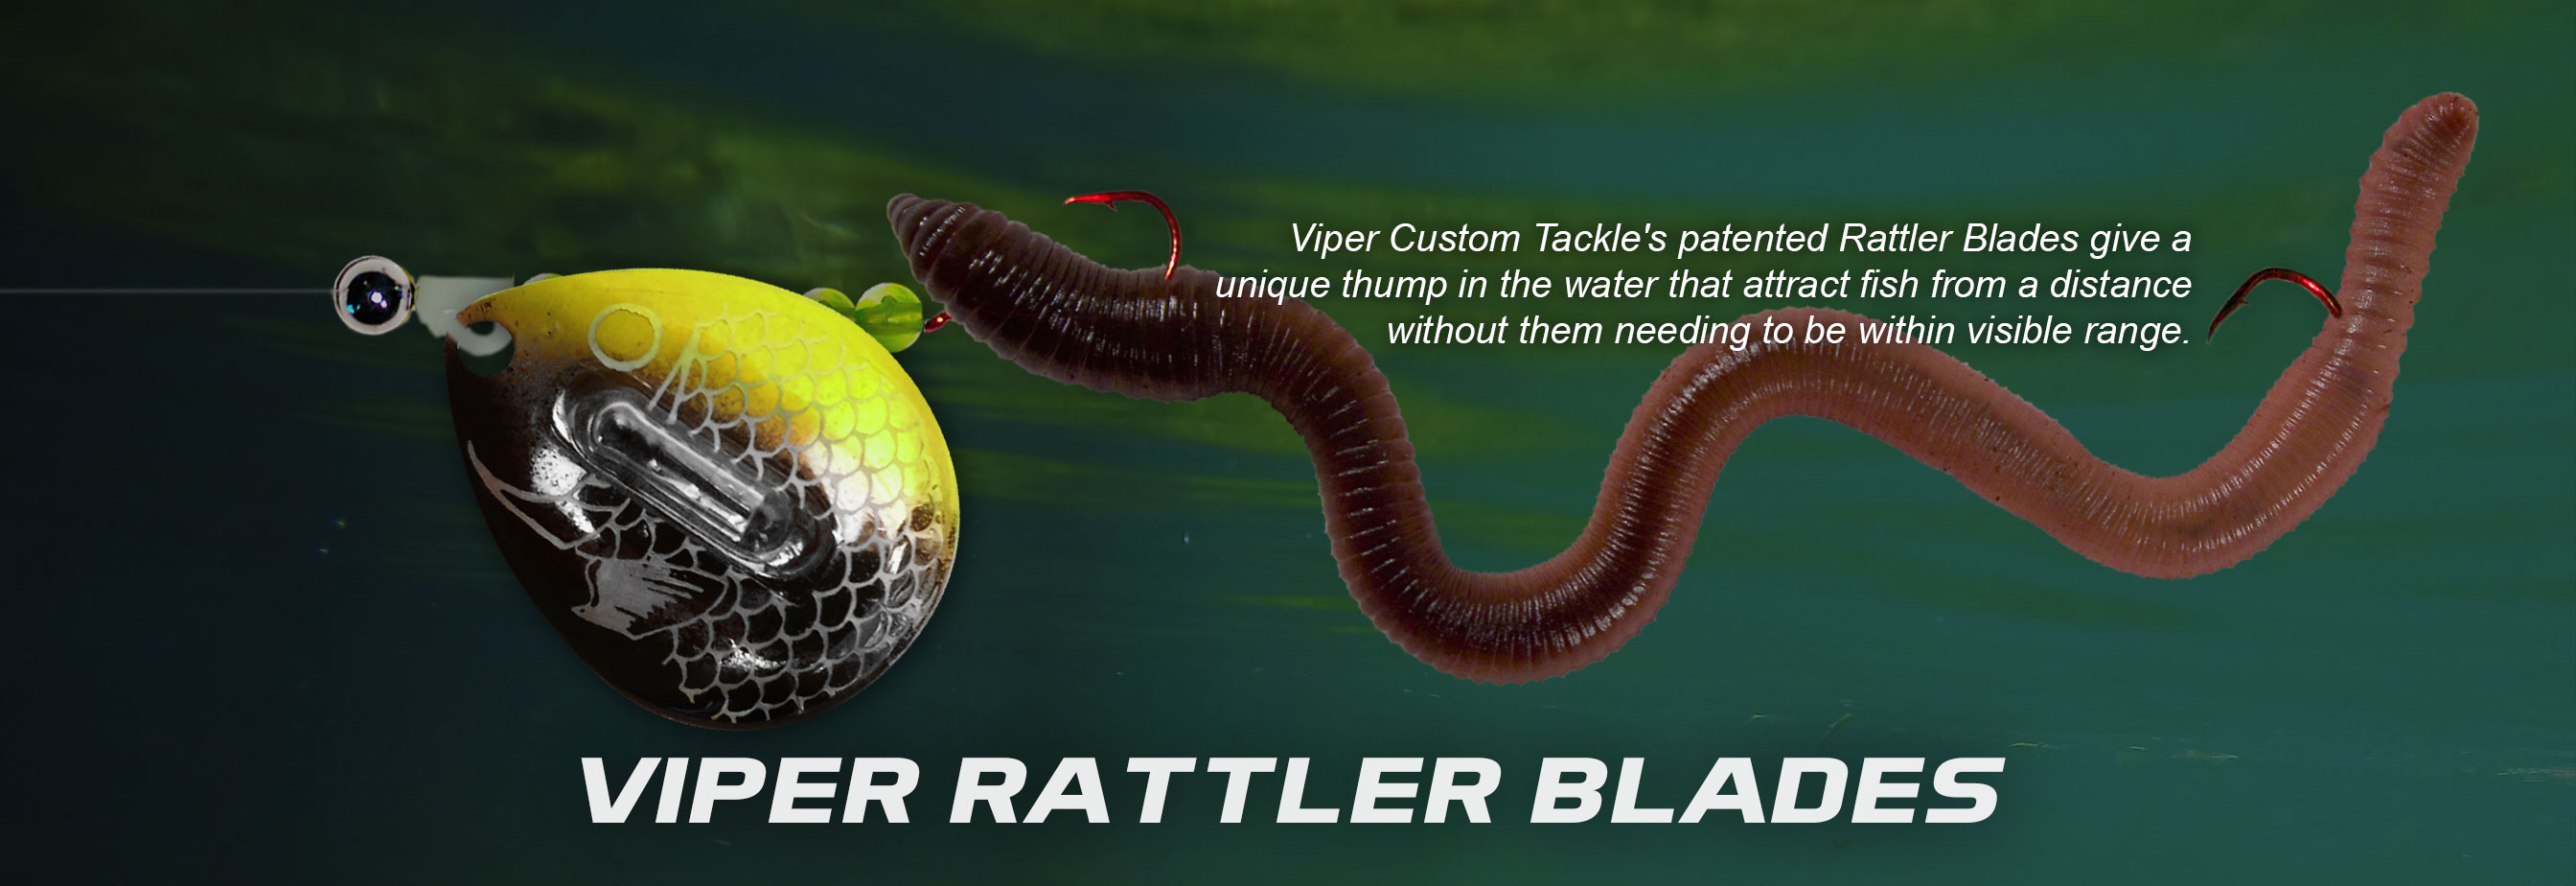 Viper Custom Tackle Rattler Blades